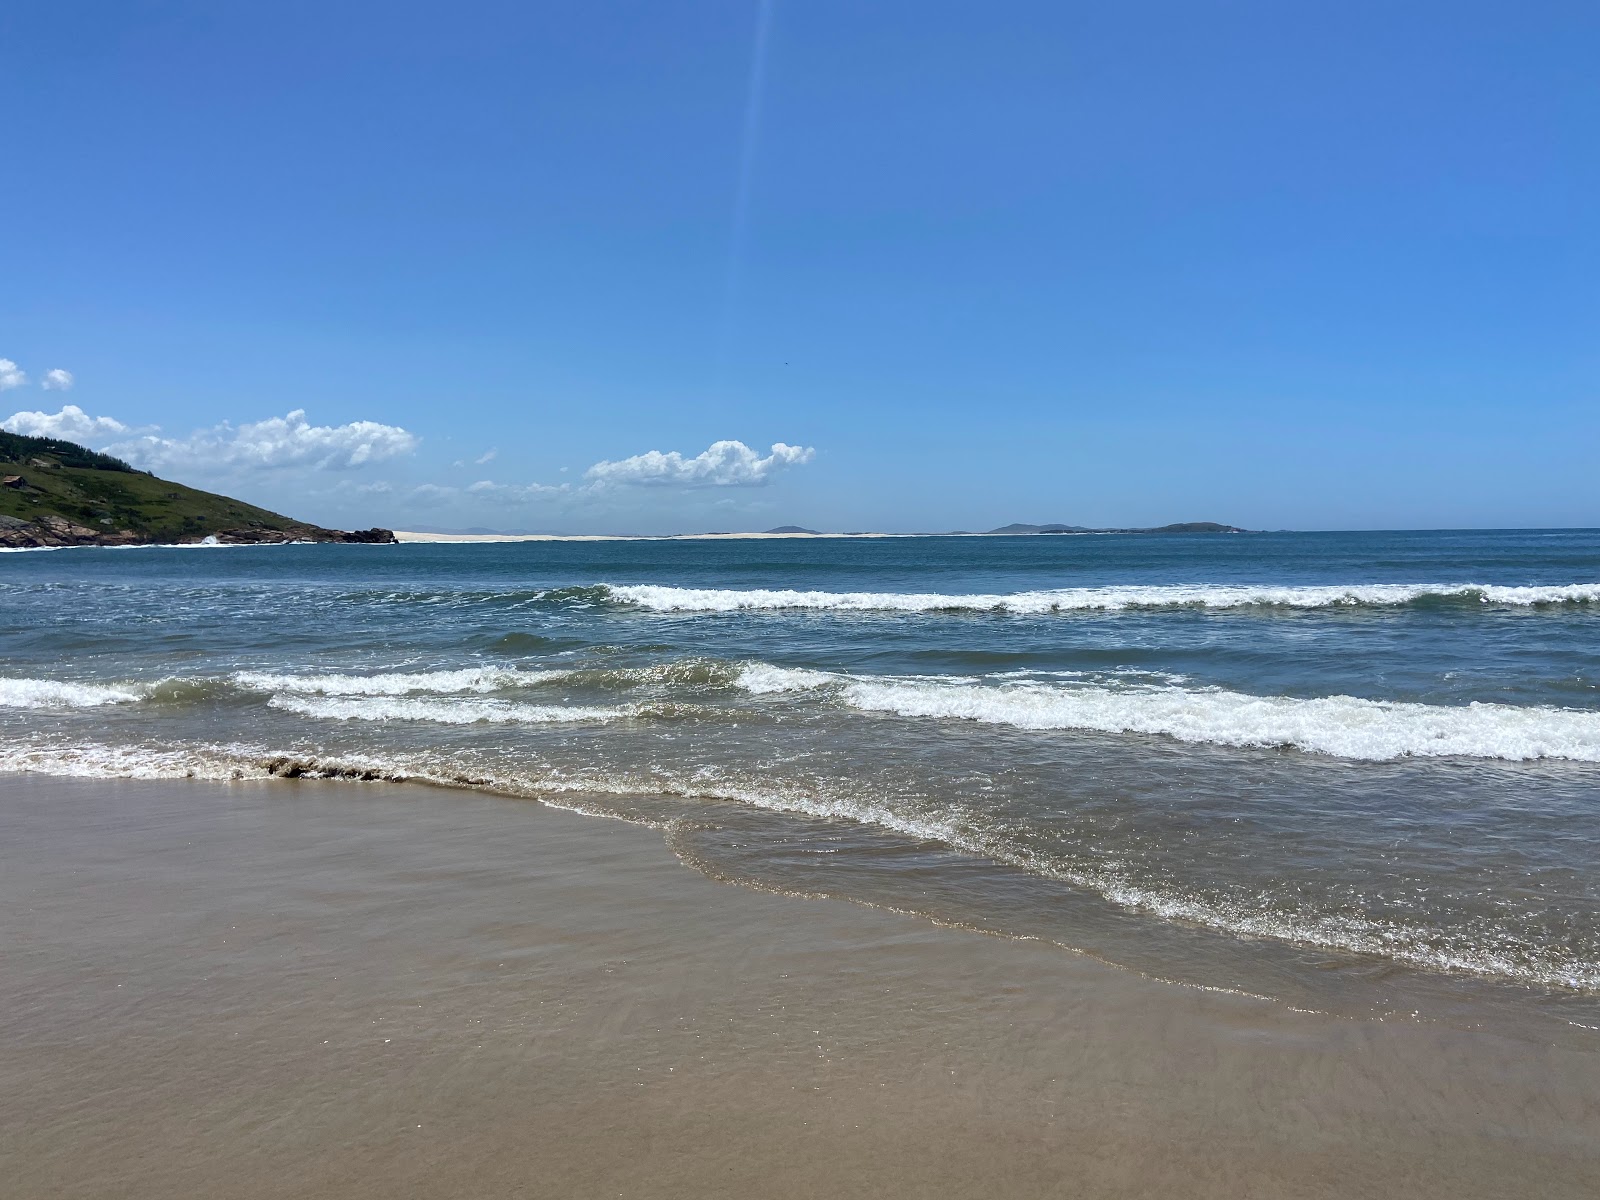 Photo of Santa Marta Lighthouse Beach - popular place among relax connoisseurs